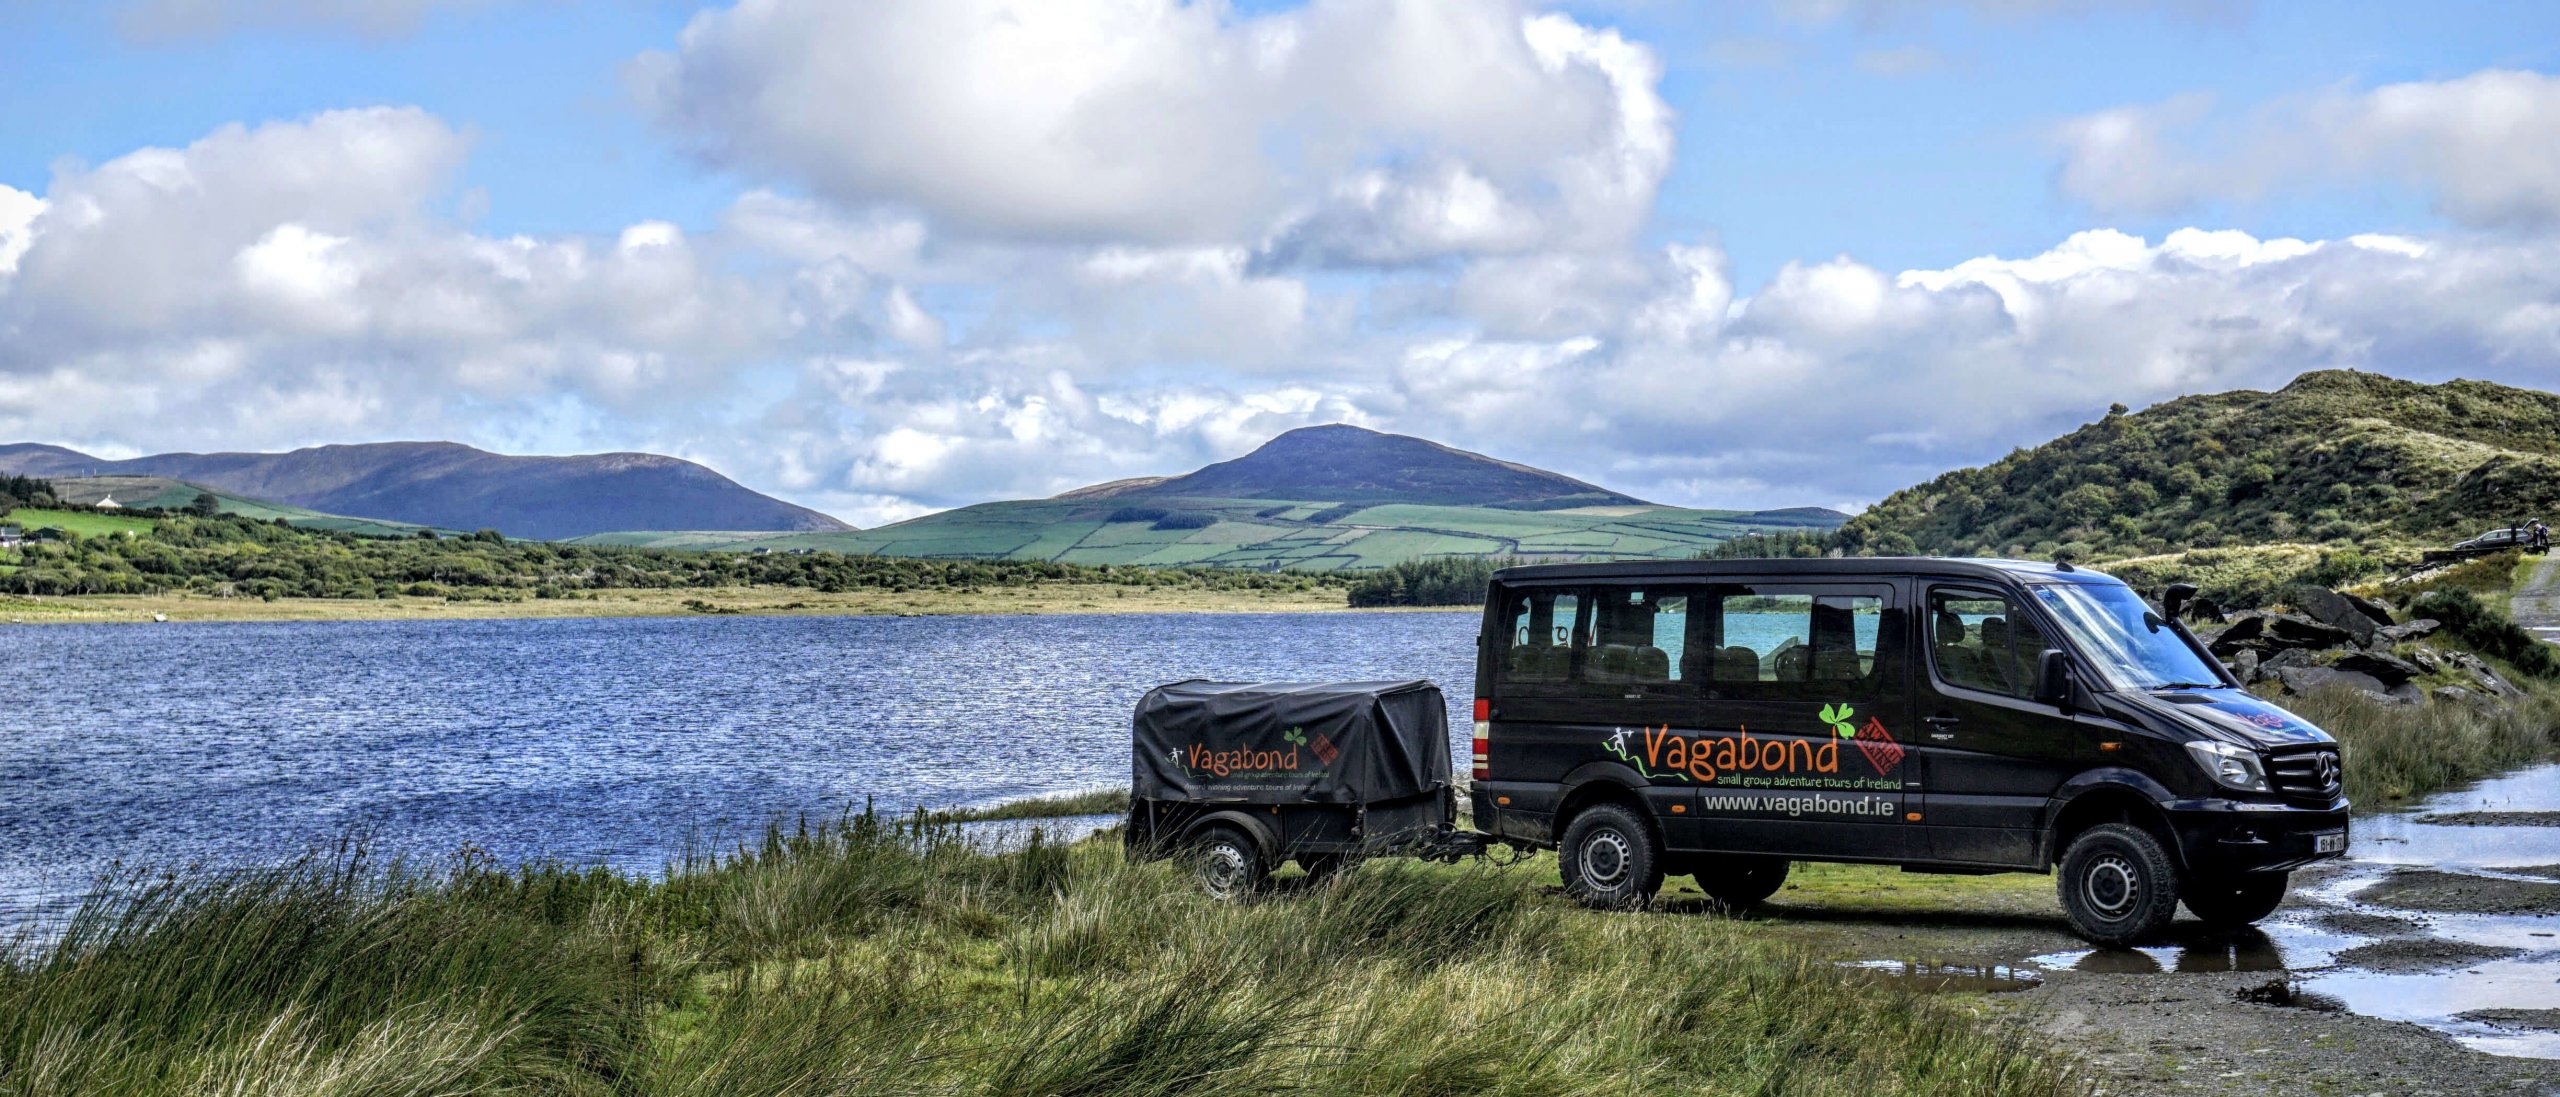 VagaTron tour vehicle at Lough Annascaul on the Dingle peninsula